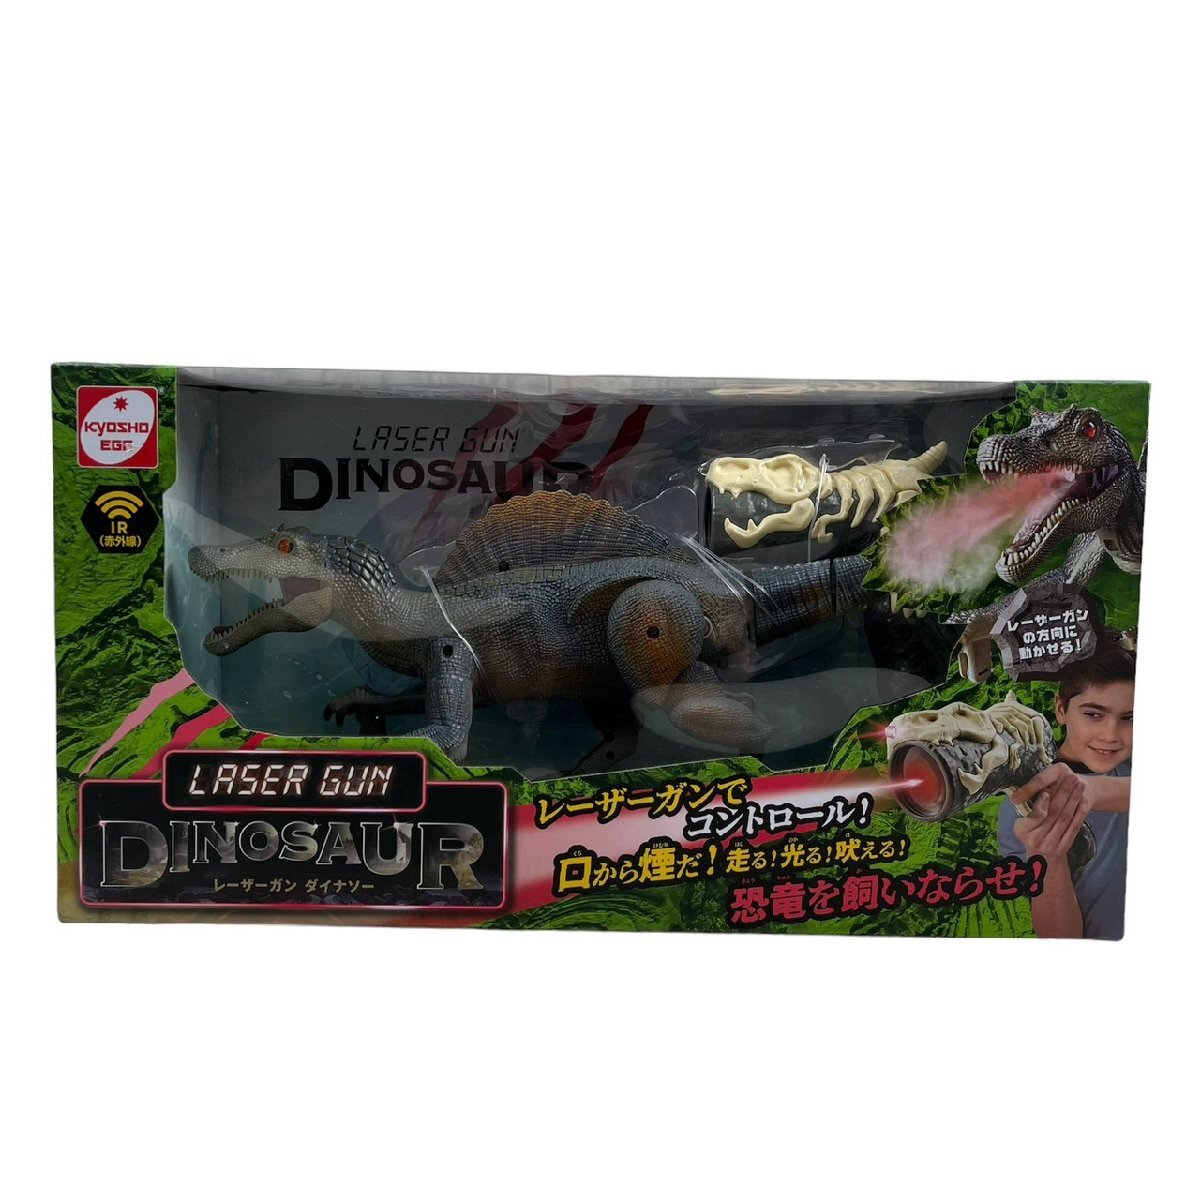  unused Kyosho kyosho EGG R/C Laser gun Dinosaur s Pinot saurus gray TS081GY infra-red rays dinosaur LASER GUN DINOSAUR SPINOSAURUS box attaching 